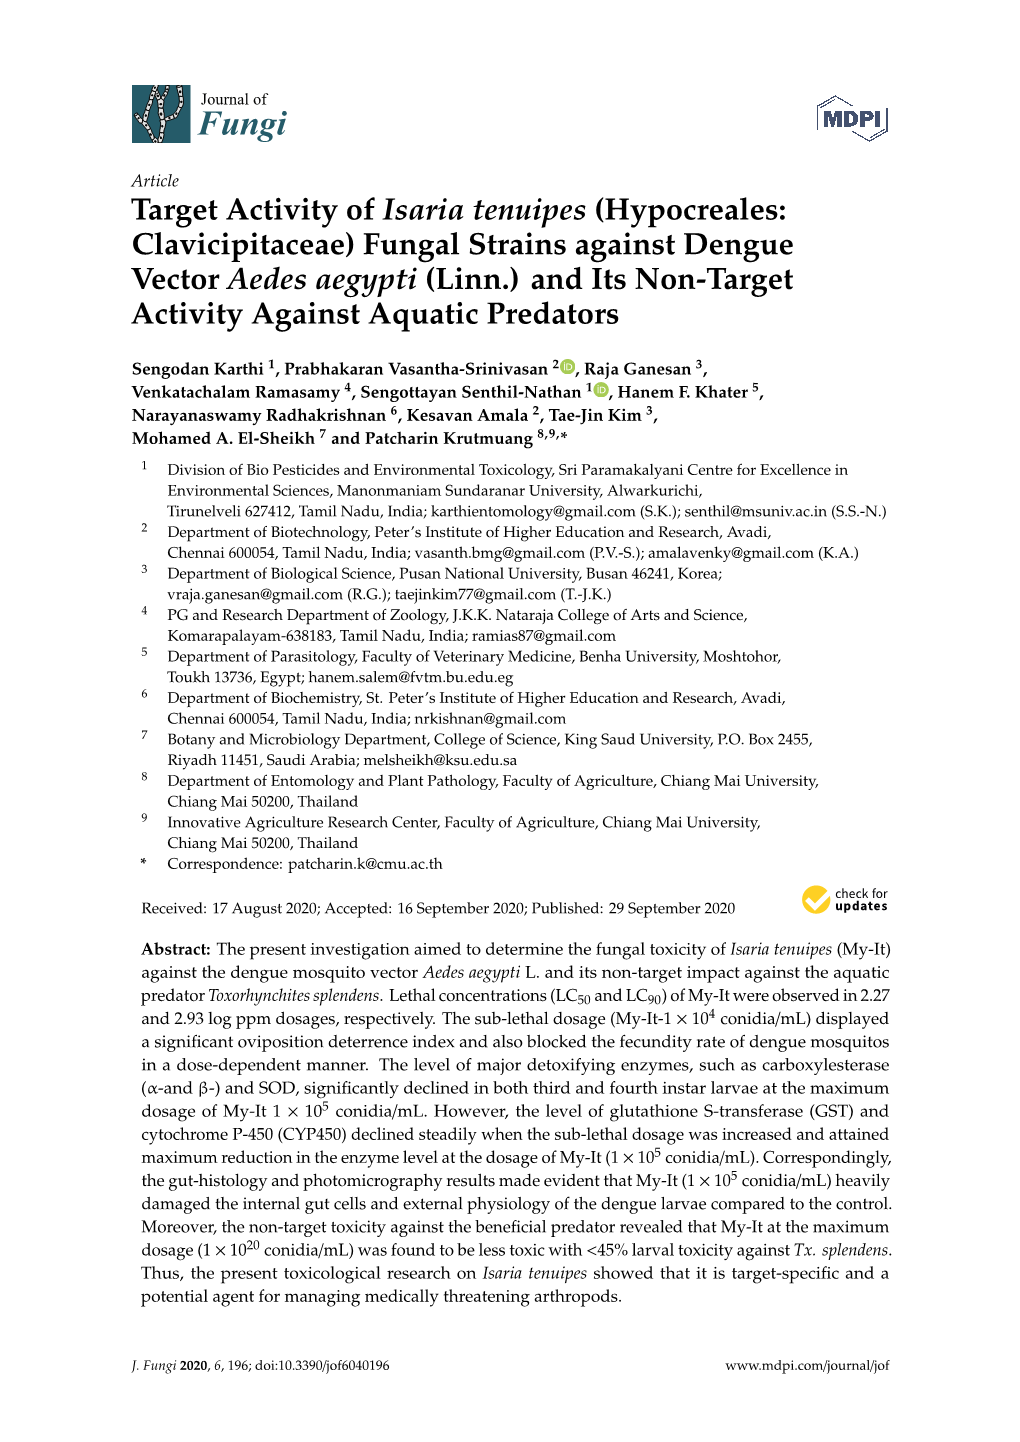 Target Activity of Isaria Tenuipes (Hypocreales: Clavicipitaceae